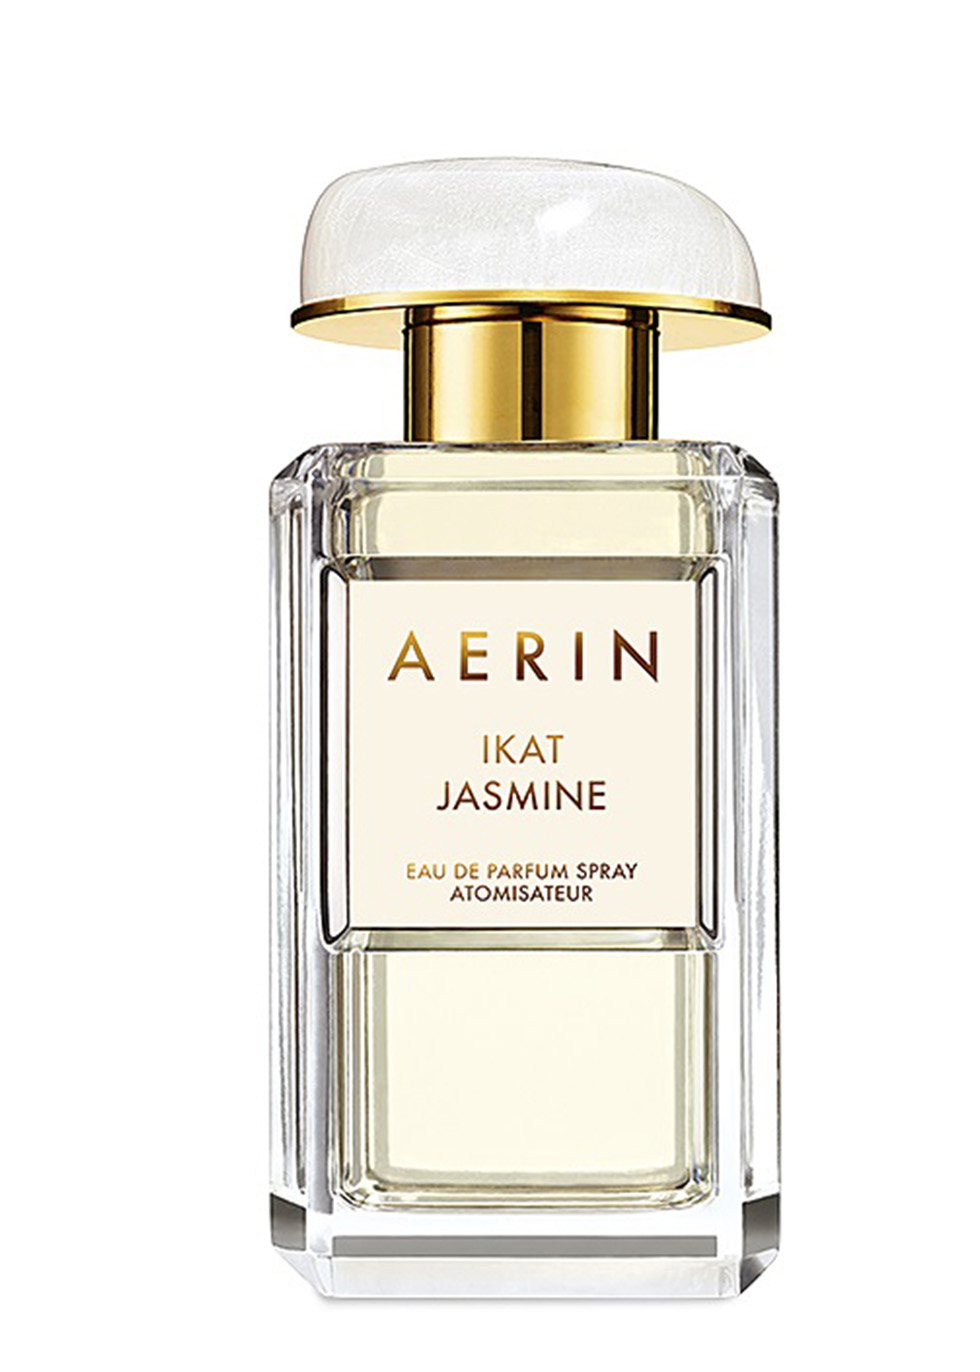 Aerin Ikat Jasmine Eau De Parfum